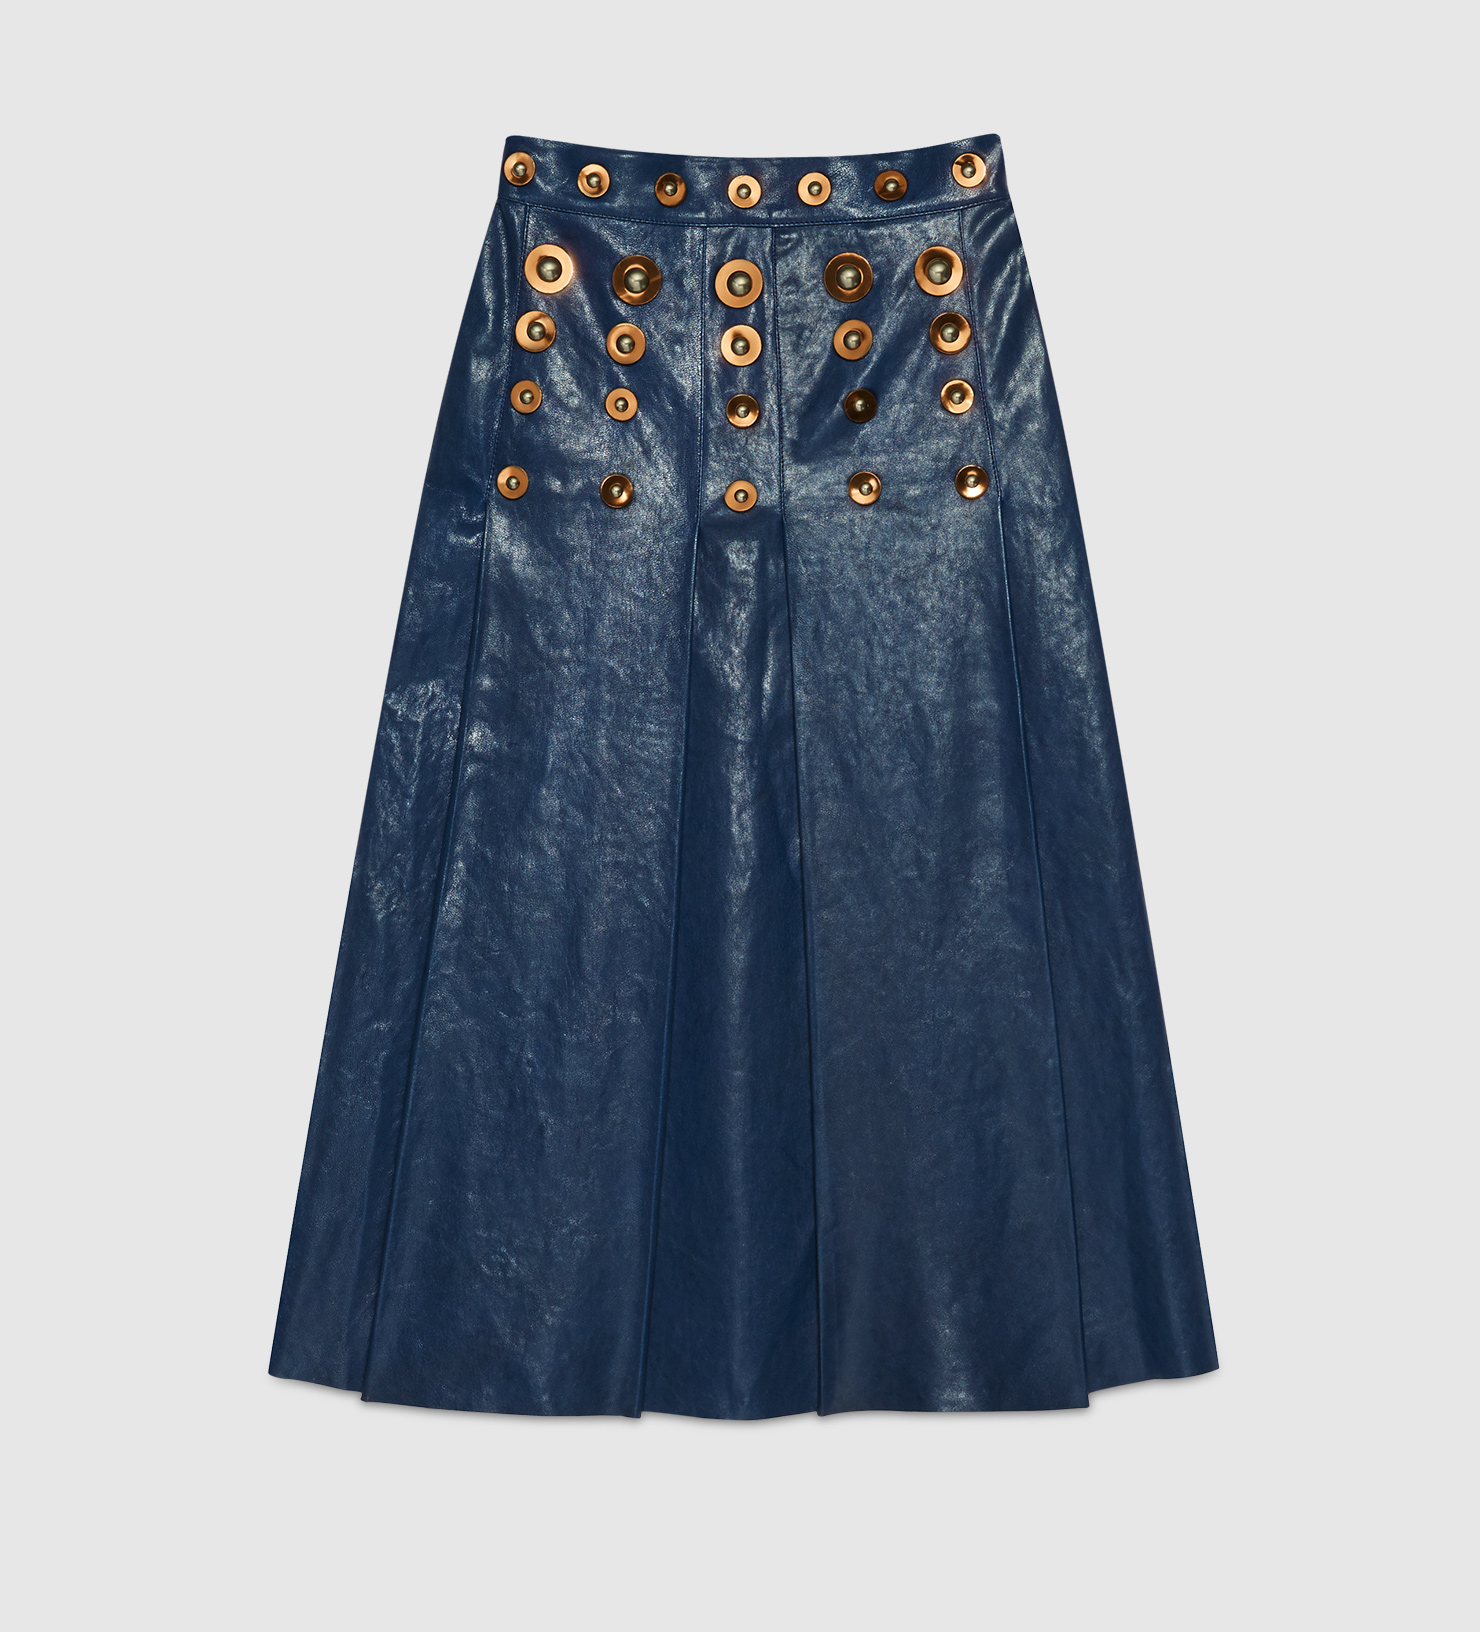 Studded Leather Skirt 104